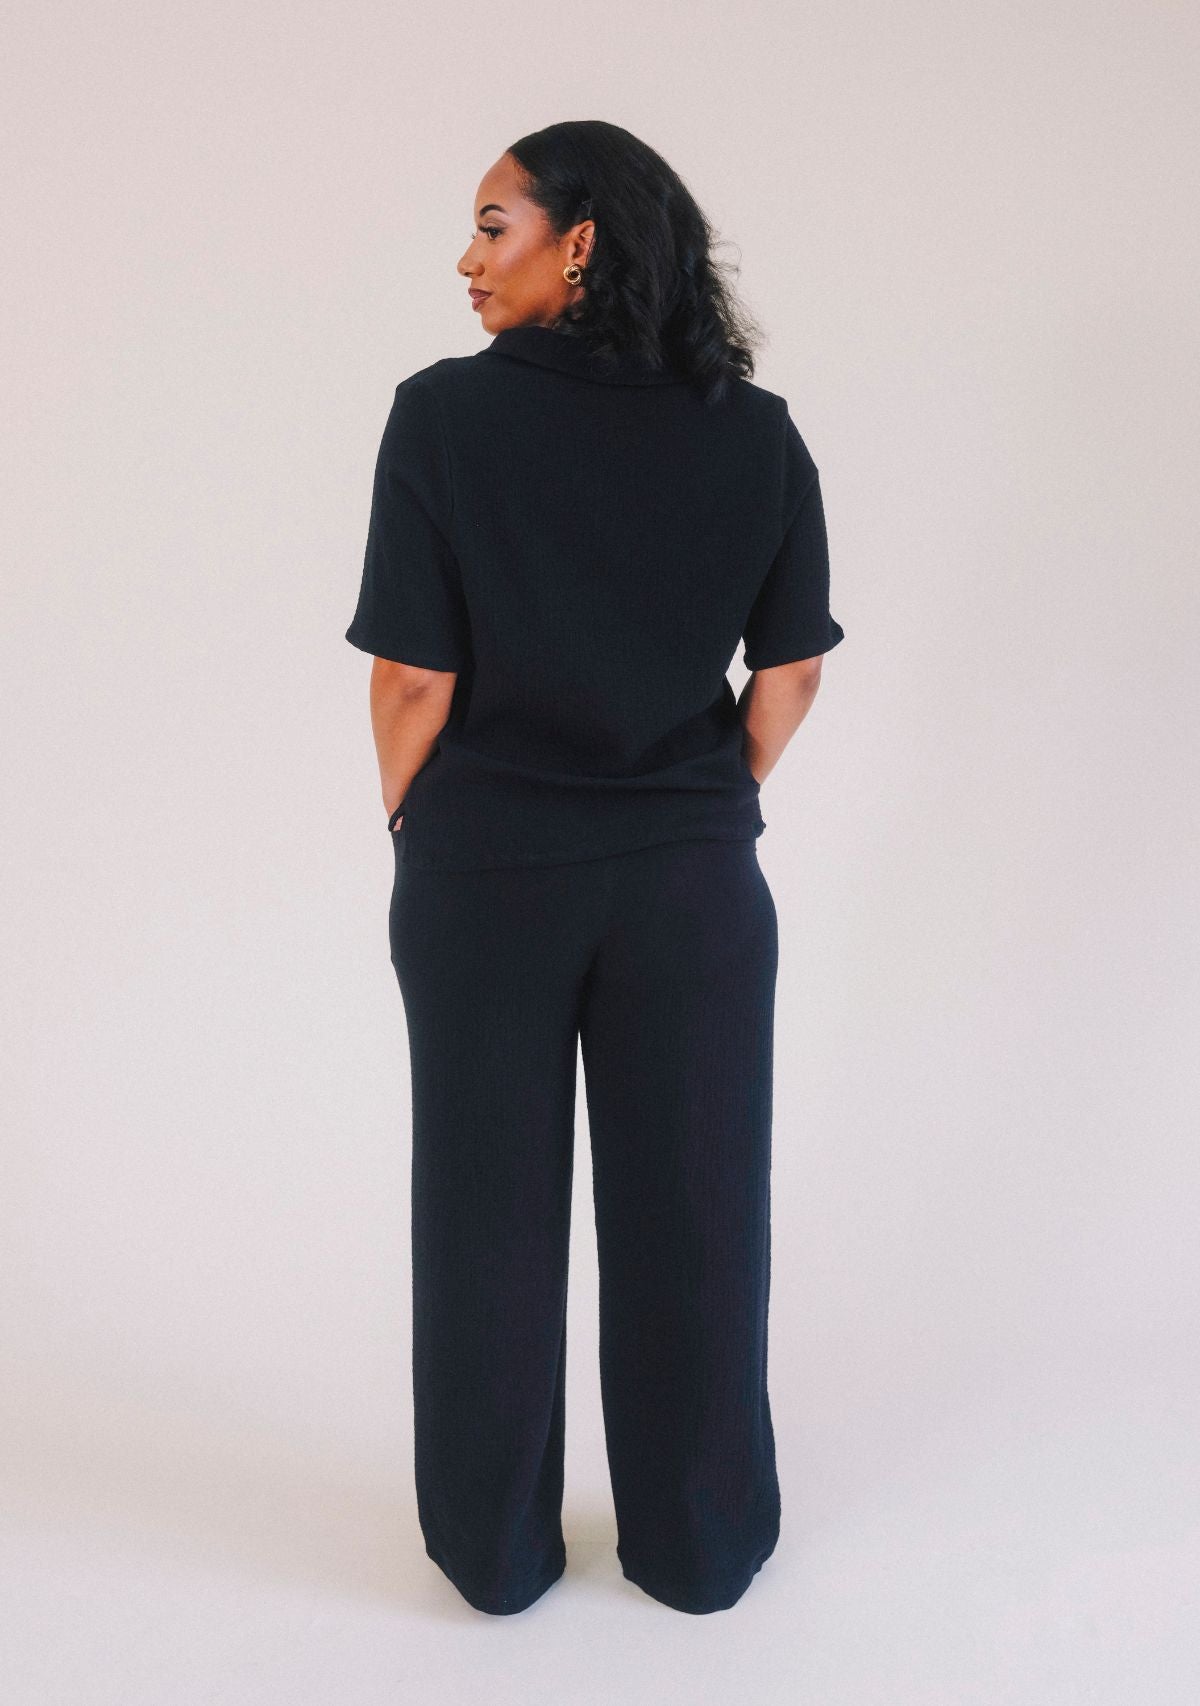 Poplinen x Simone Organic Cotton Gauze Long Wide Leg Pant in color black women's sizes XS-3X